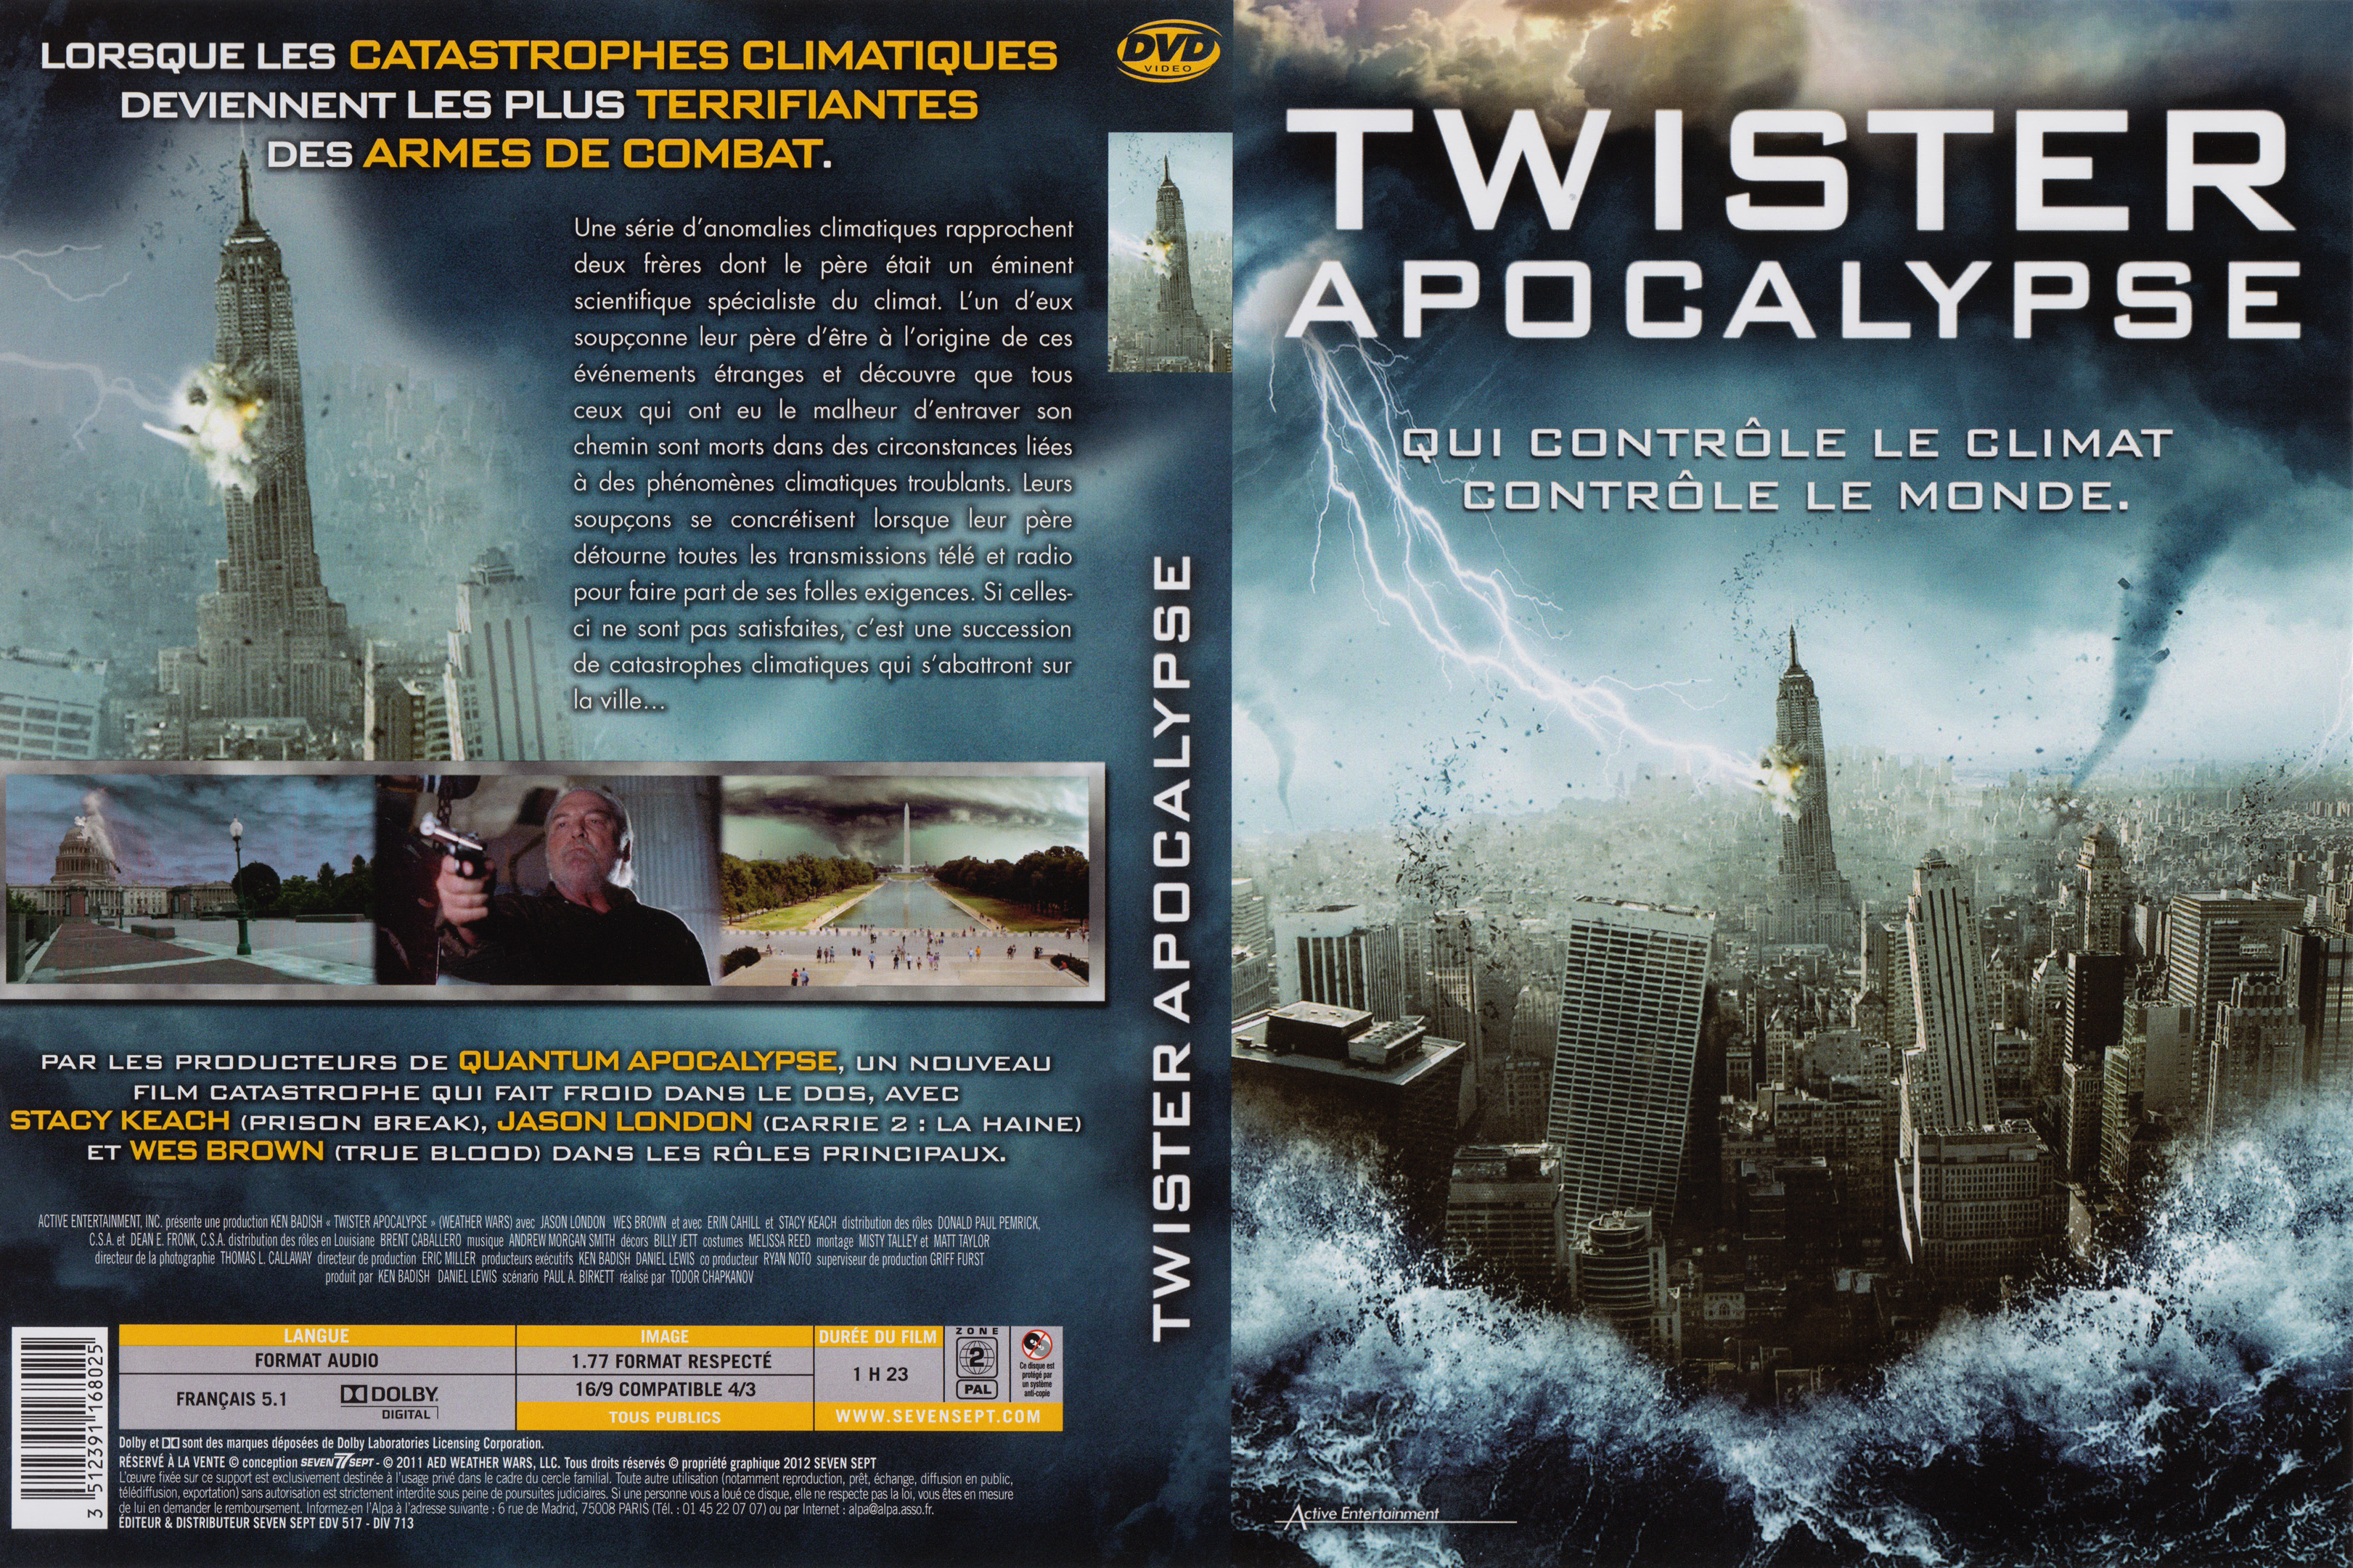 Jaquette DVD Twister apocalypse